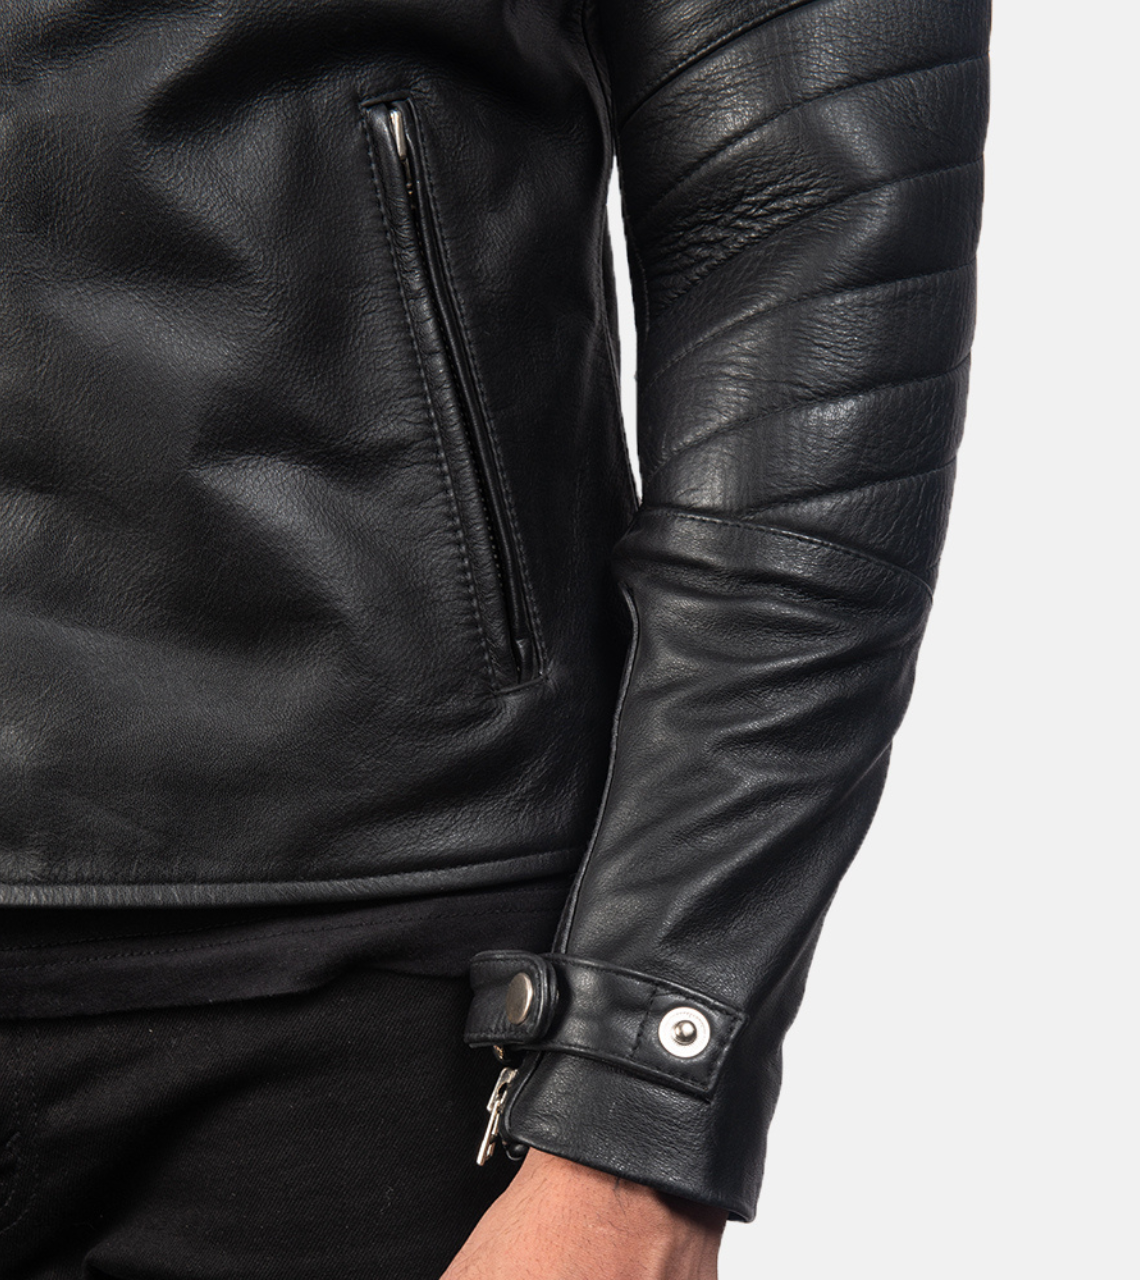 Bollons Leather Biker Jacket Cuff